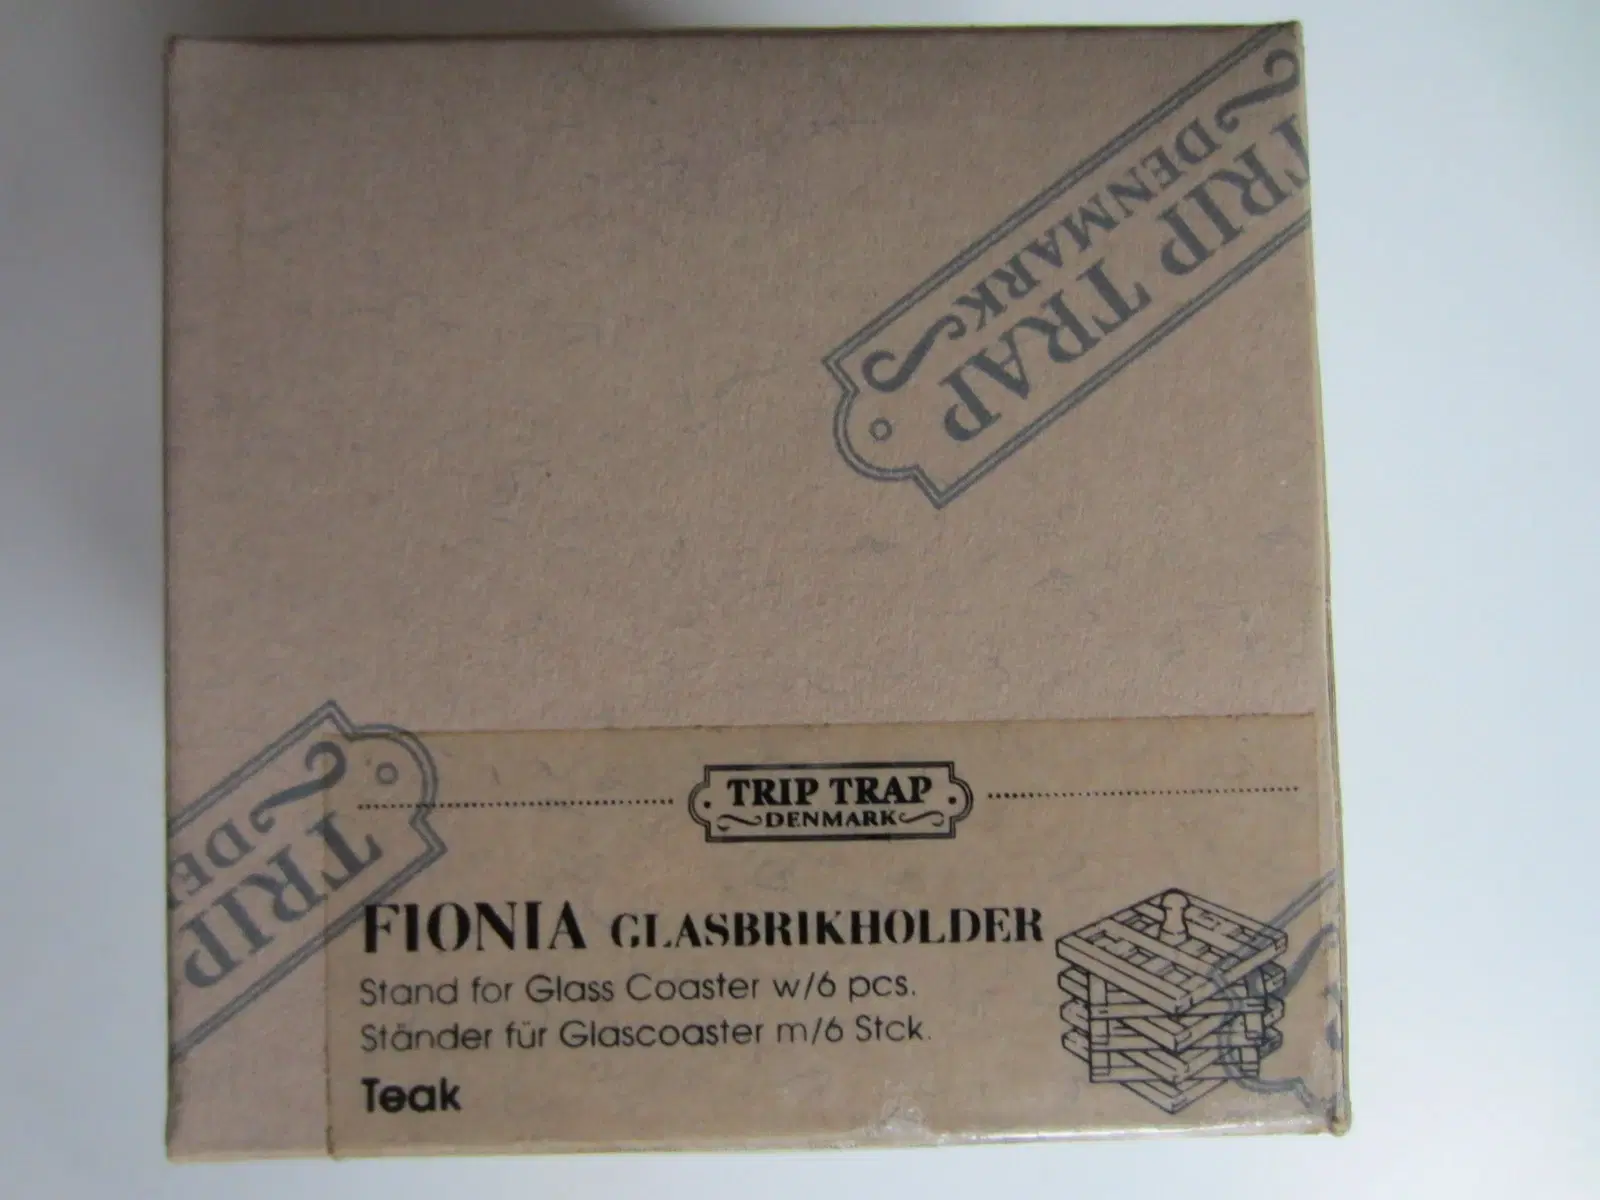 Trip Trap teak træs Coastere FIONIA glasbrikholder